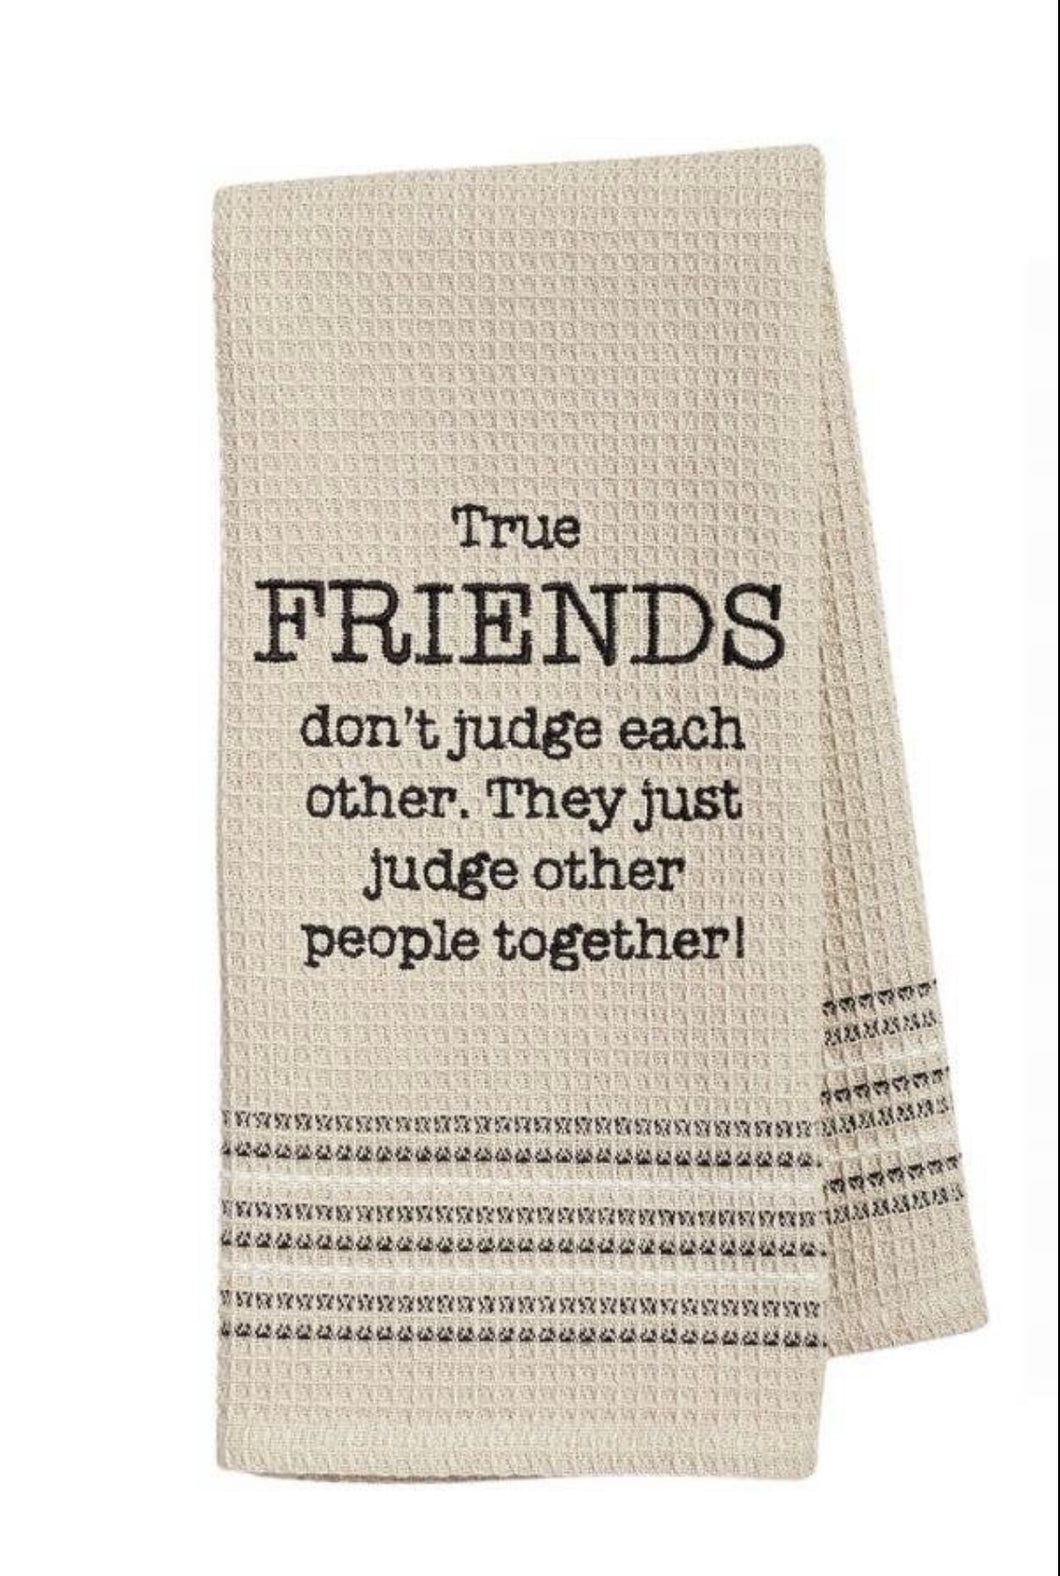 True friends don’t judge each other Dish Towel